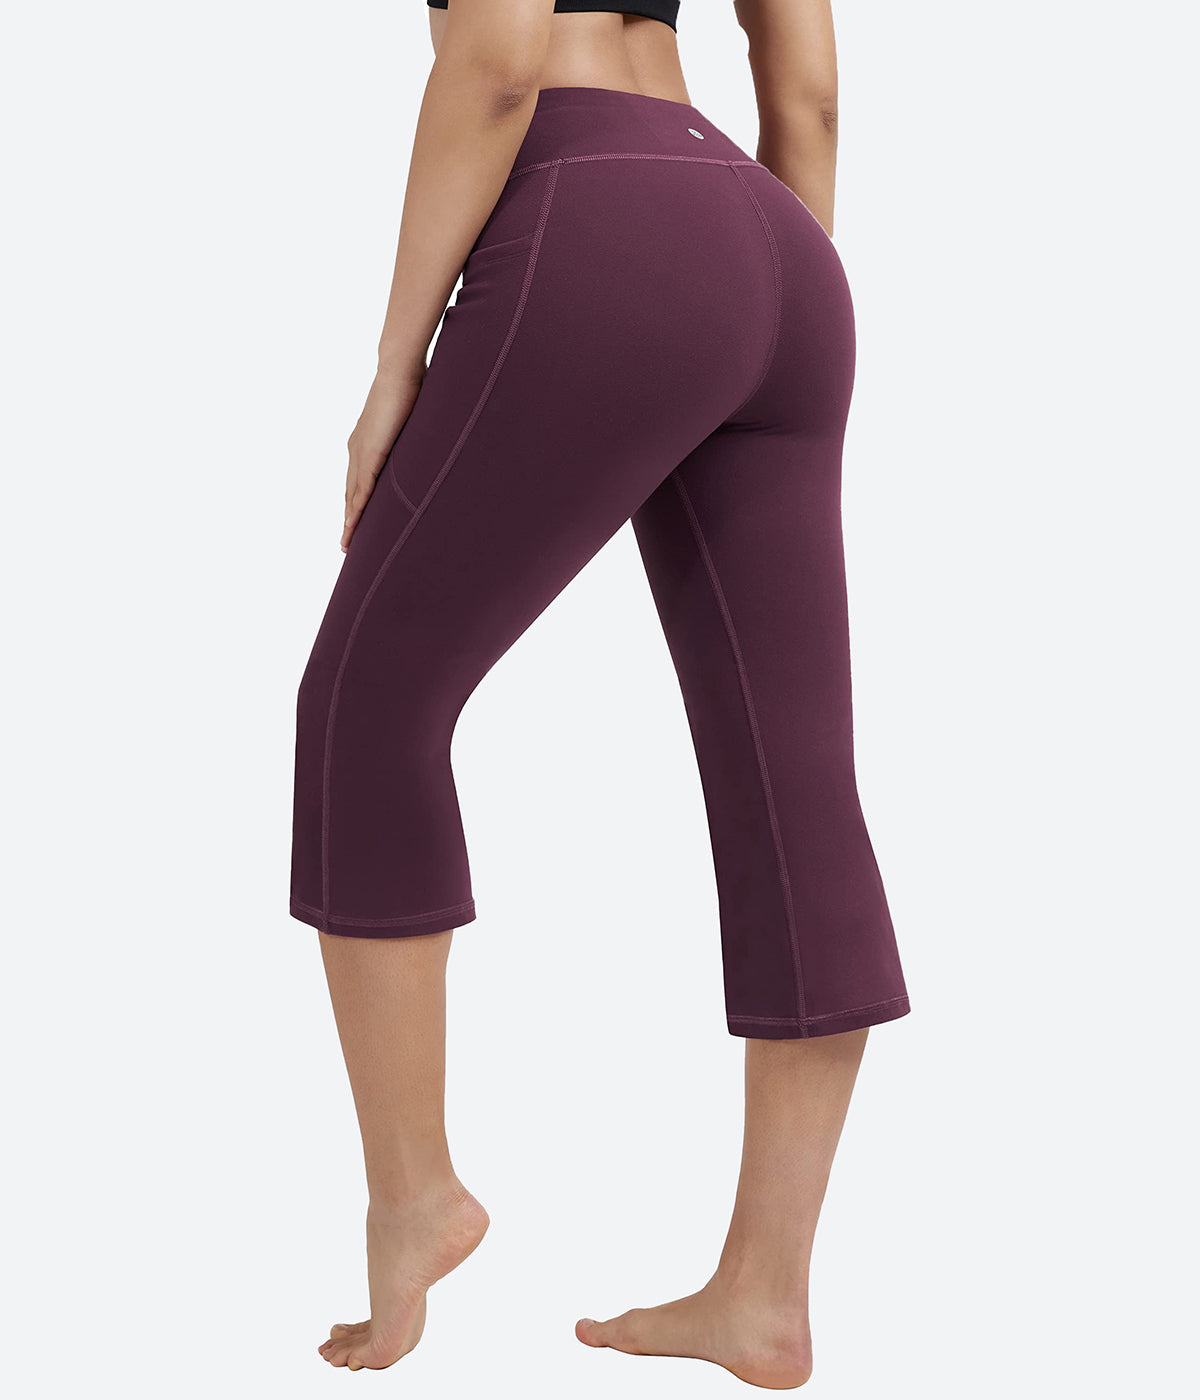 leggings with pockets for women capri 2 pack : Opuntia Yoga Pants